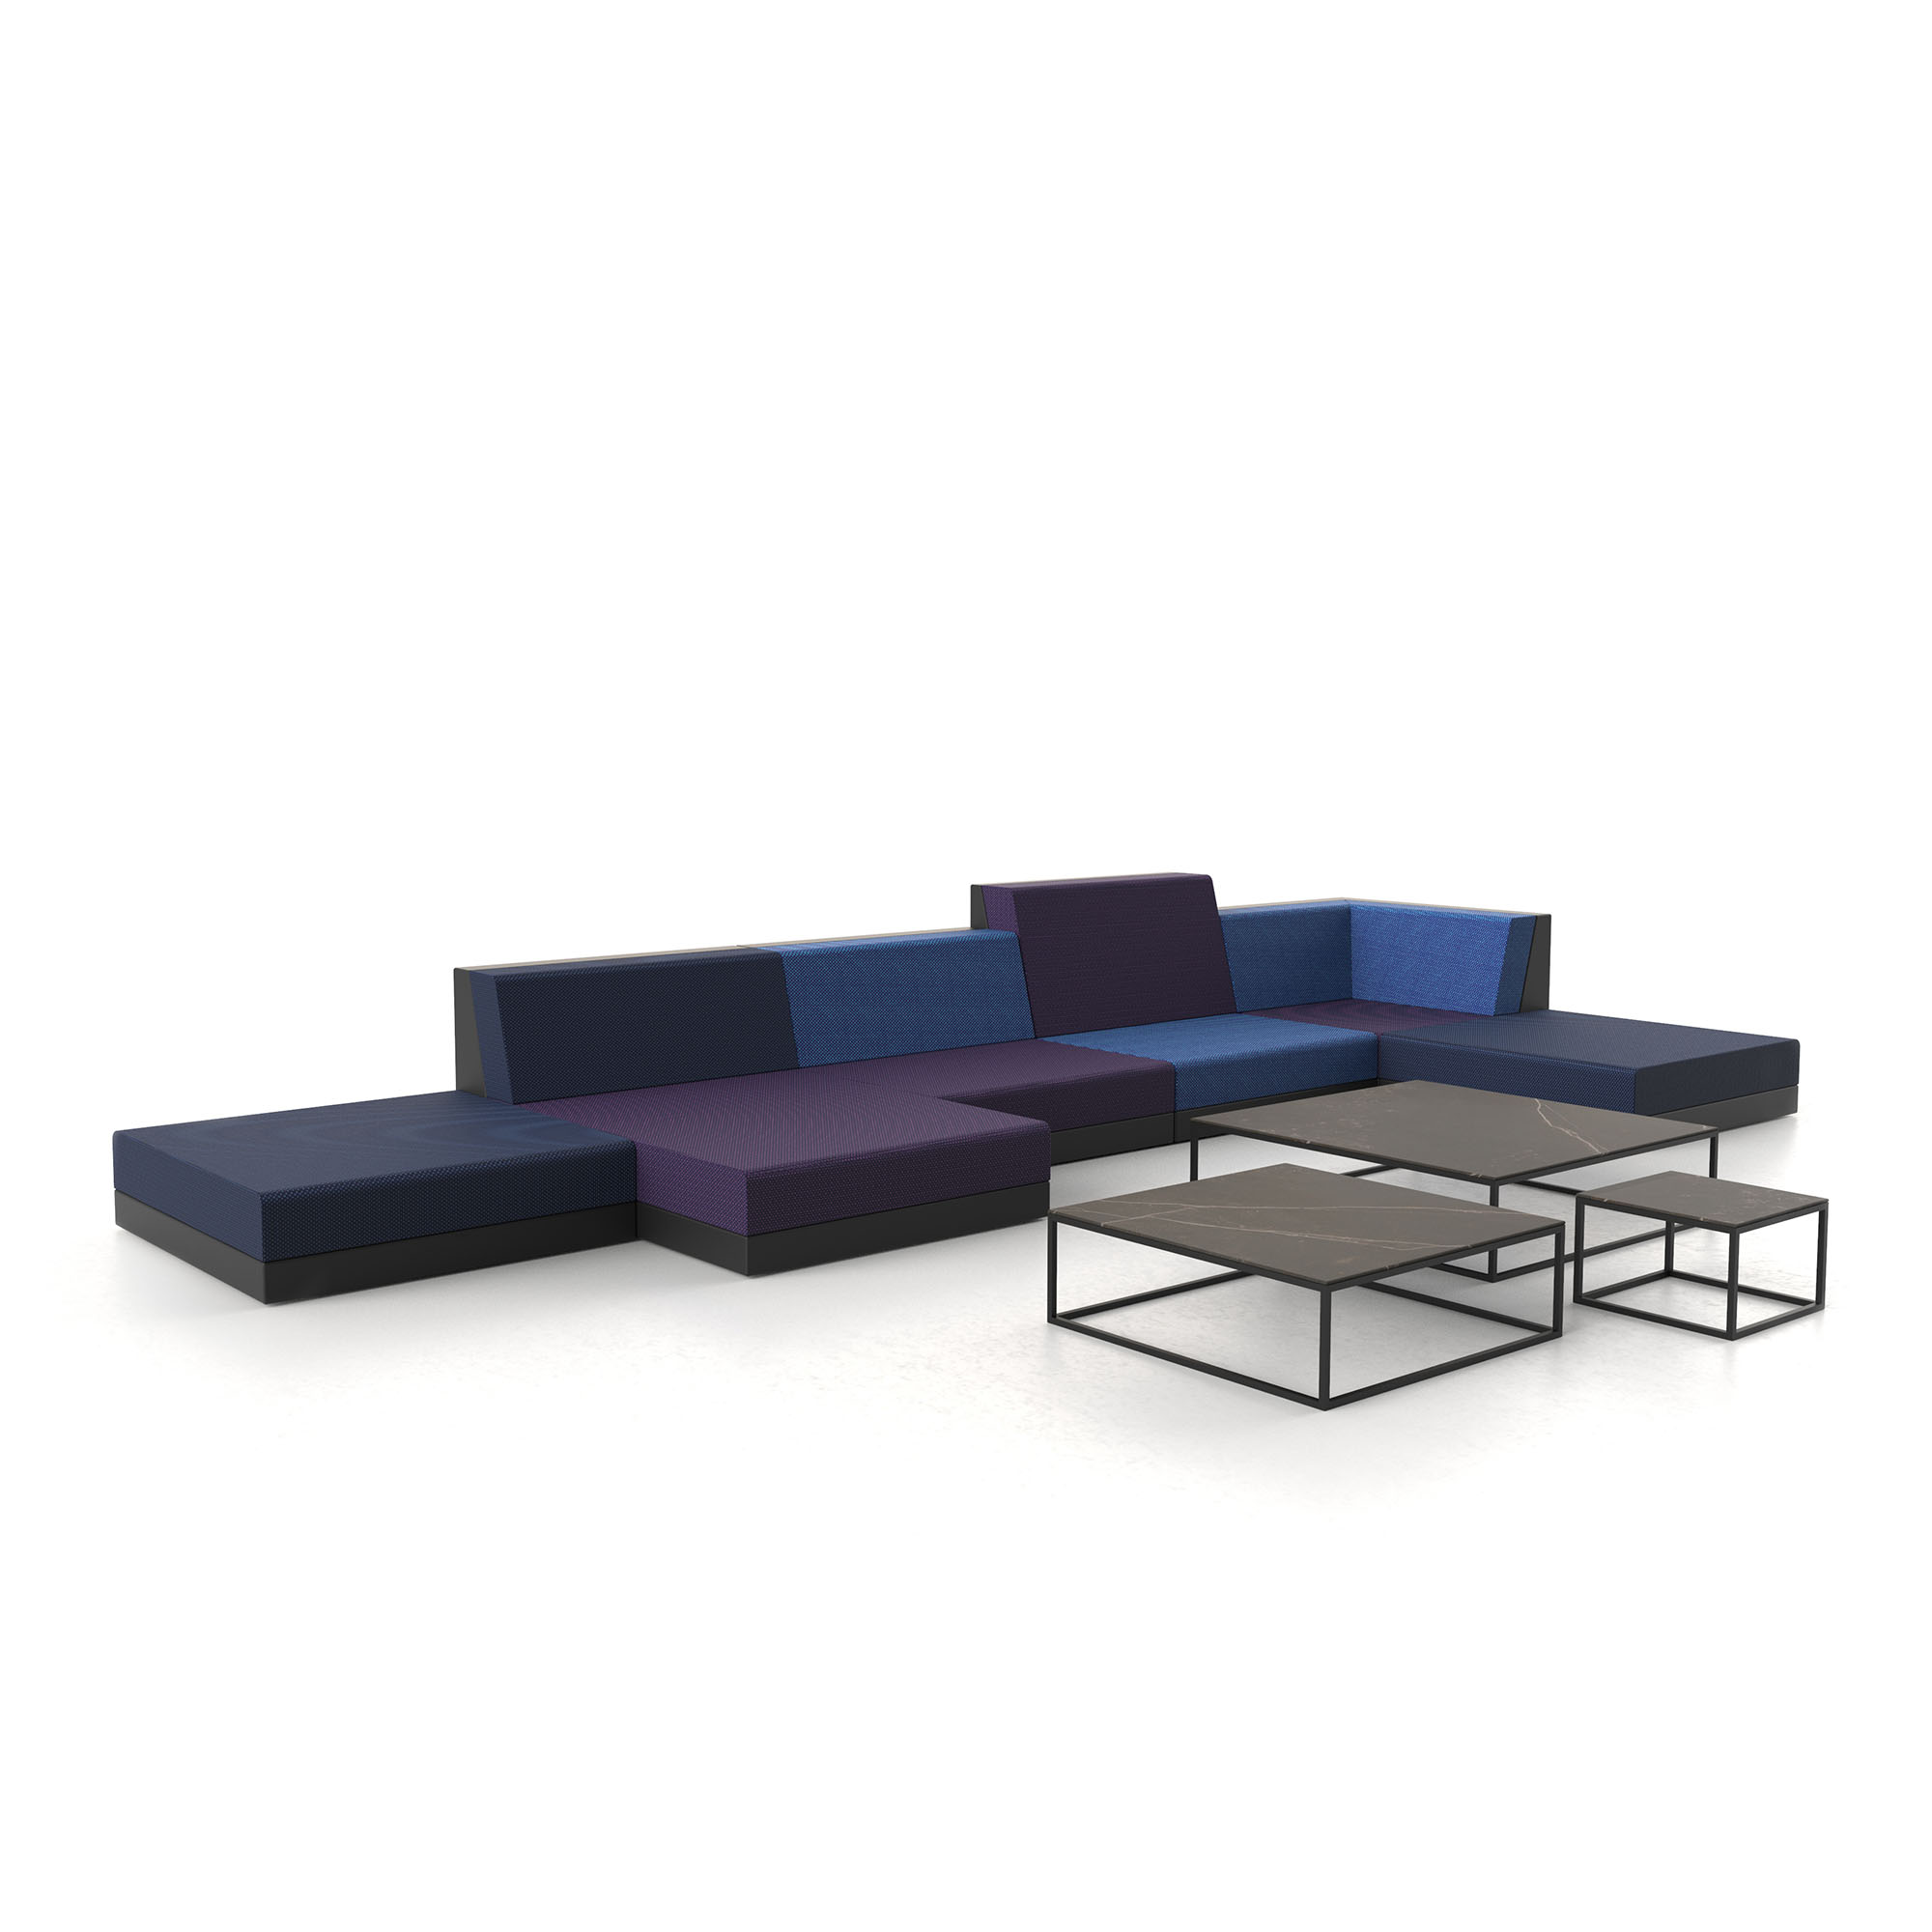 Vondom PIxel outdoor modular sofa Ramon Esteve 2 